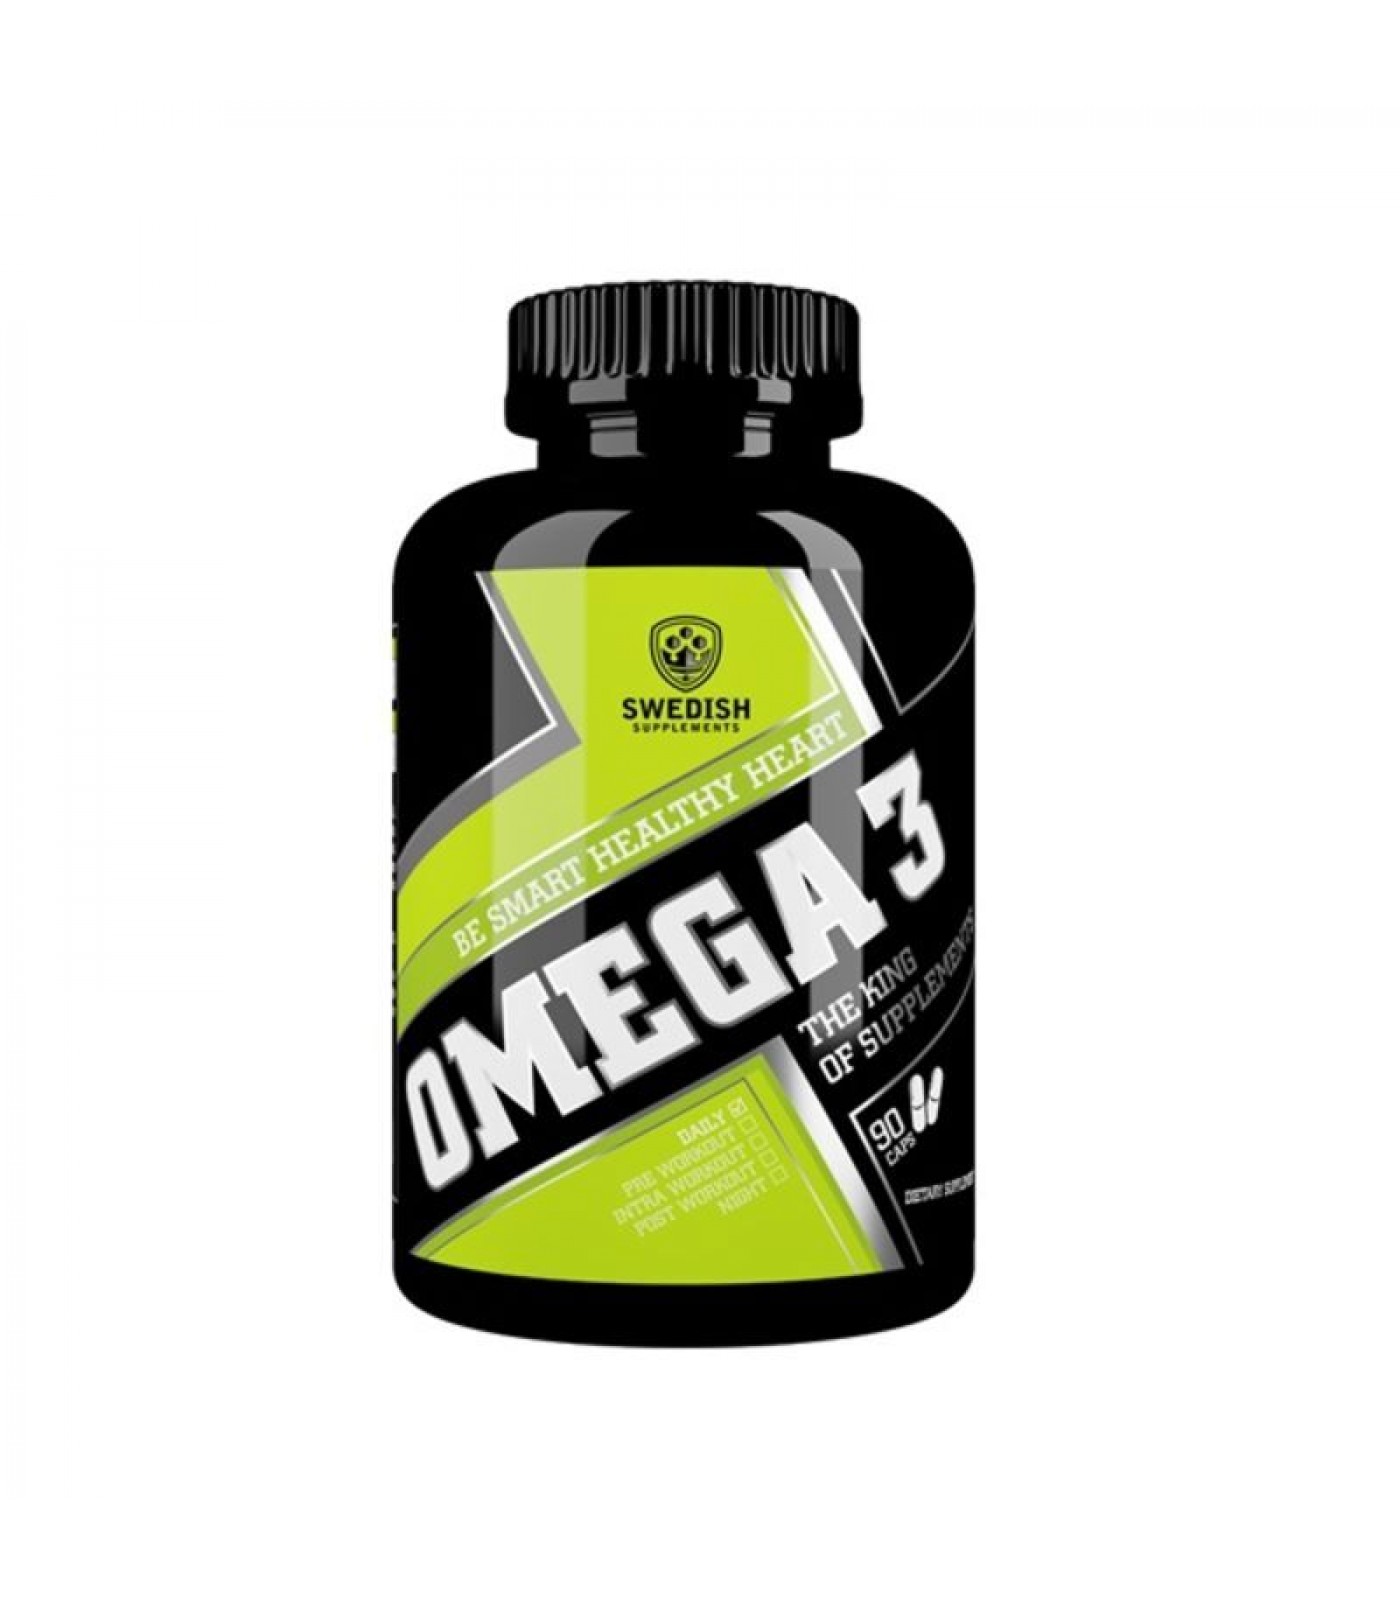 SWEDISH Supplements - Be Smart - Omega 3